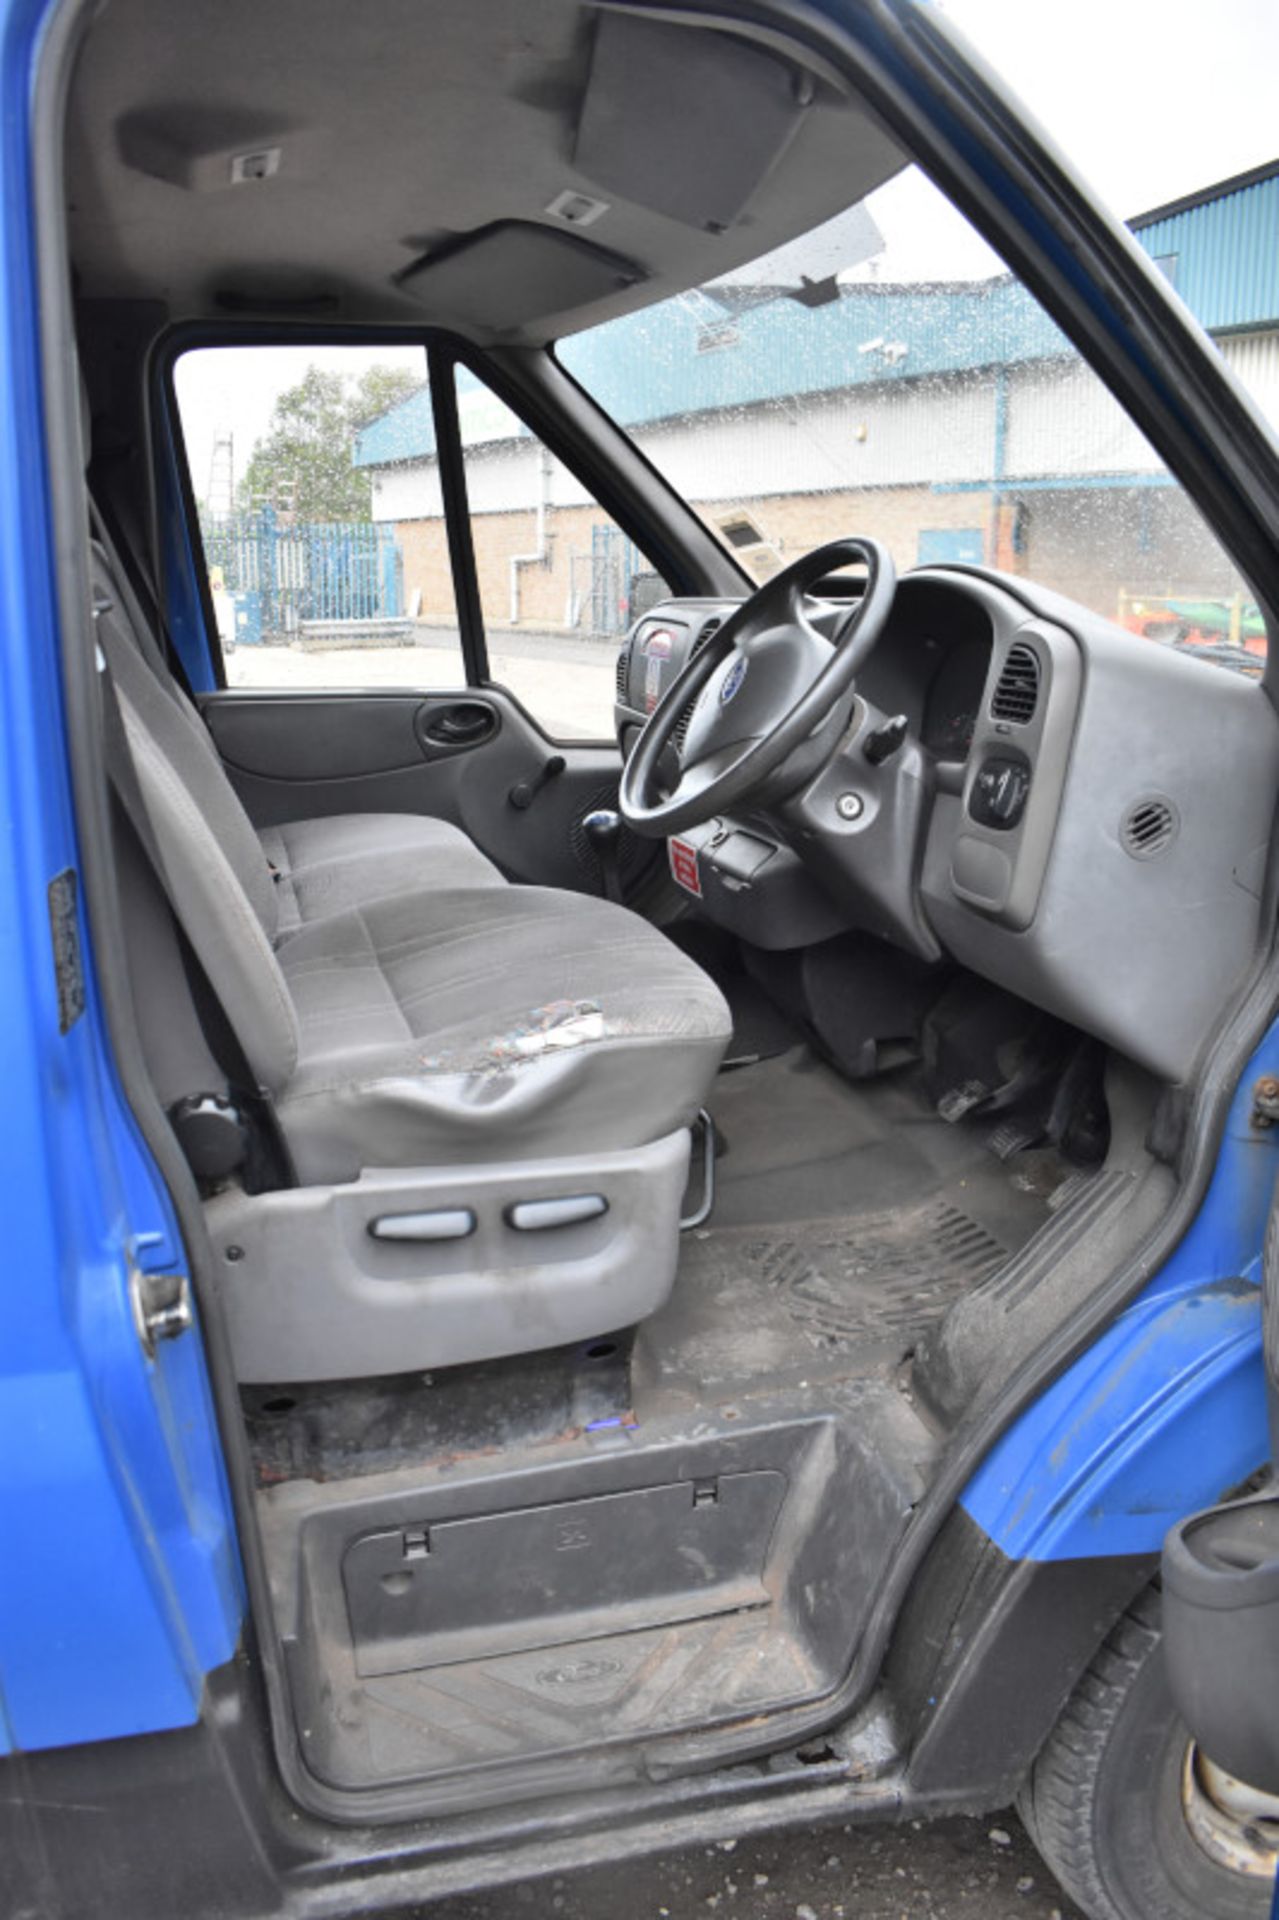 Ford Transit Van - MF54 0LX - 350 LWB - 2-axle rigid body - 3500kg gross - 2402CC - 3 seat - Image 16 of 37